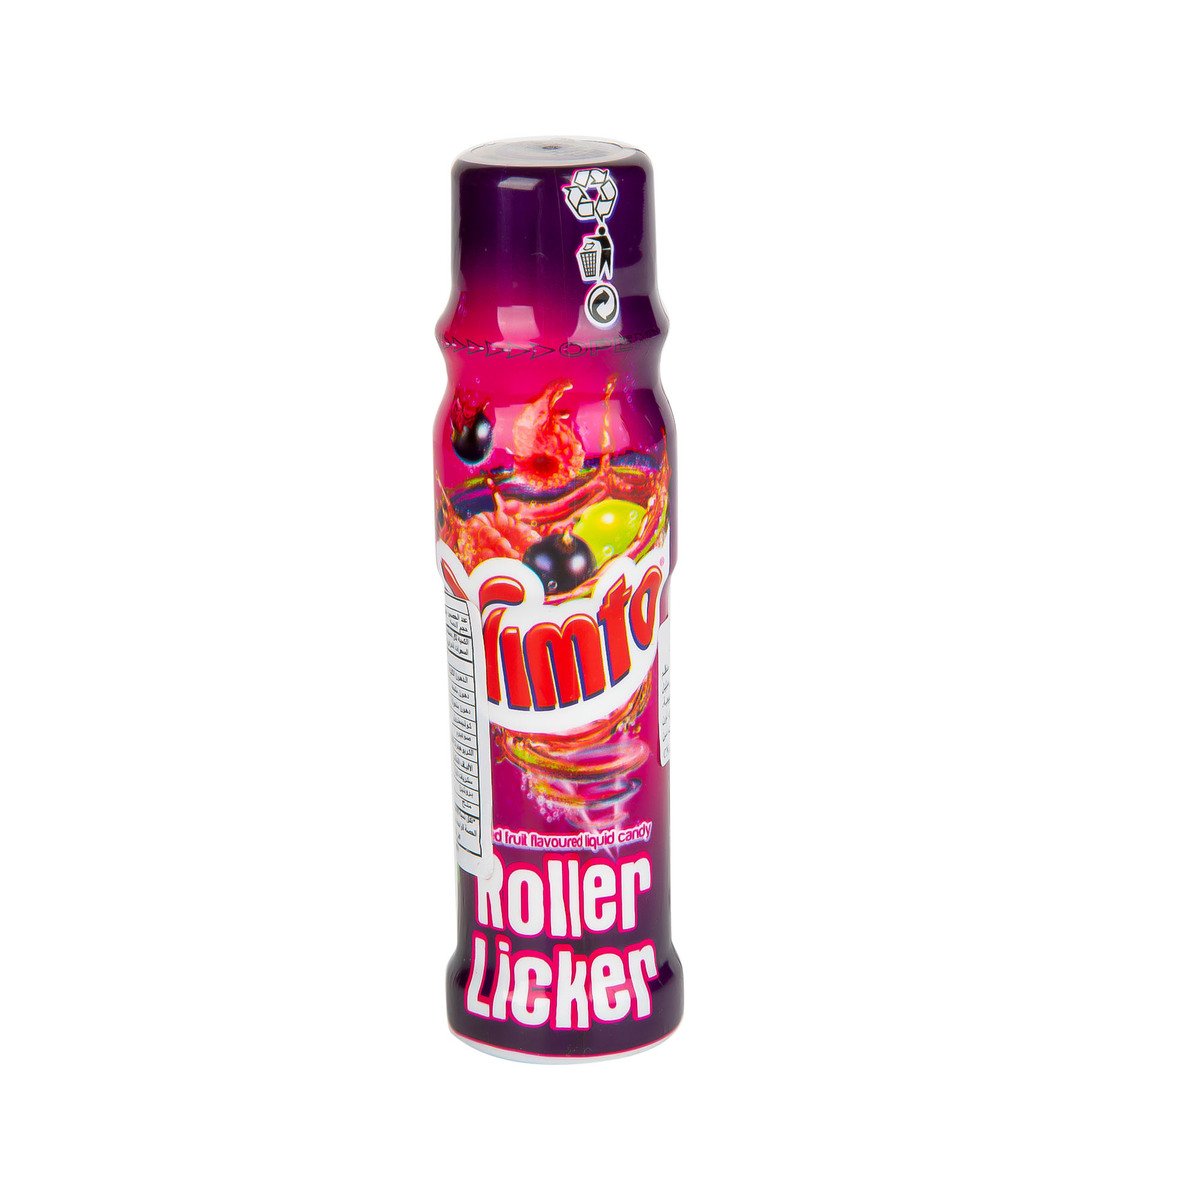 Vimto Candy Roller Licker 60 ml